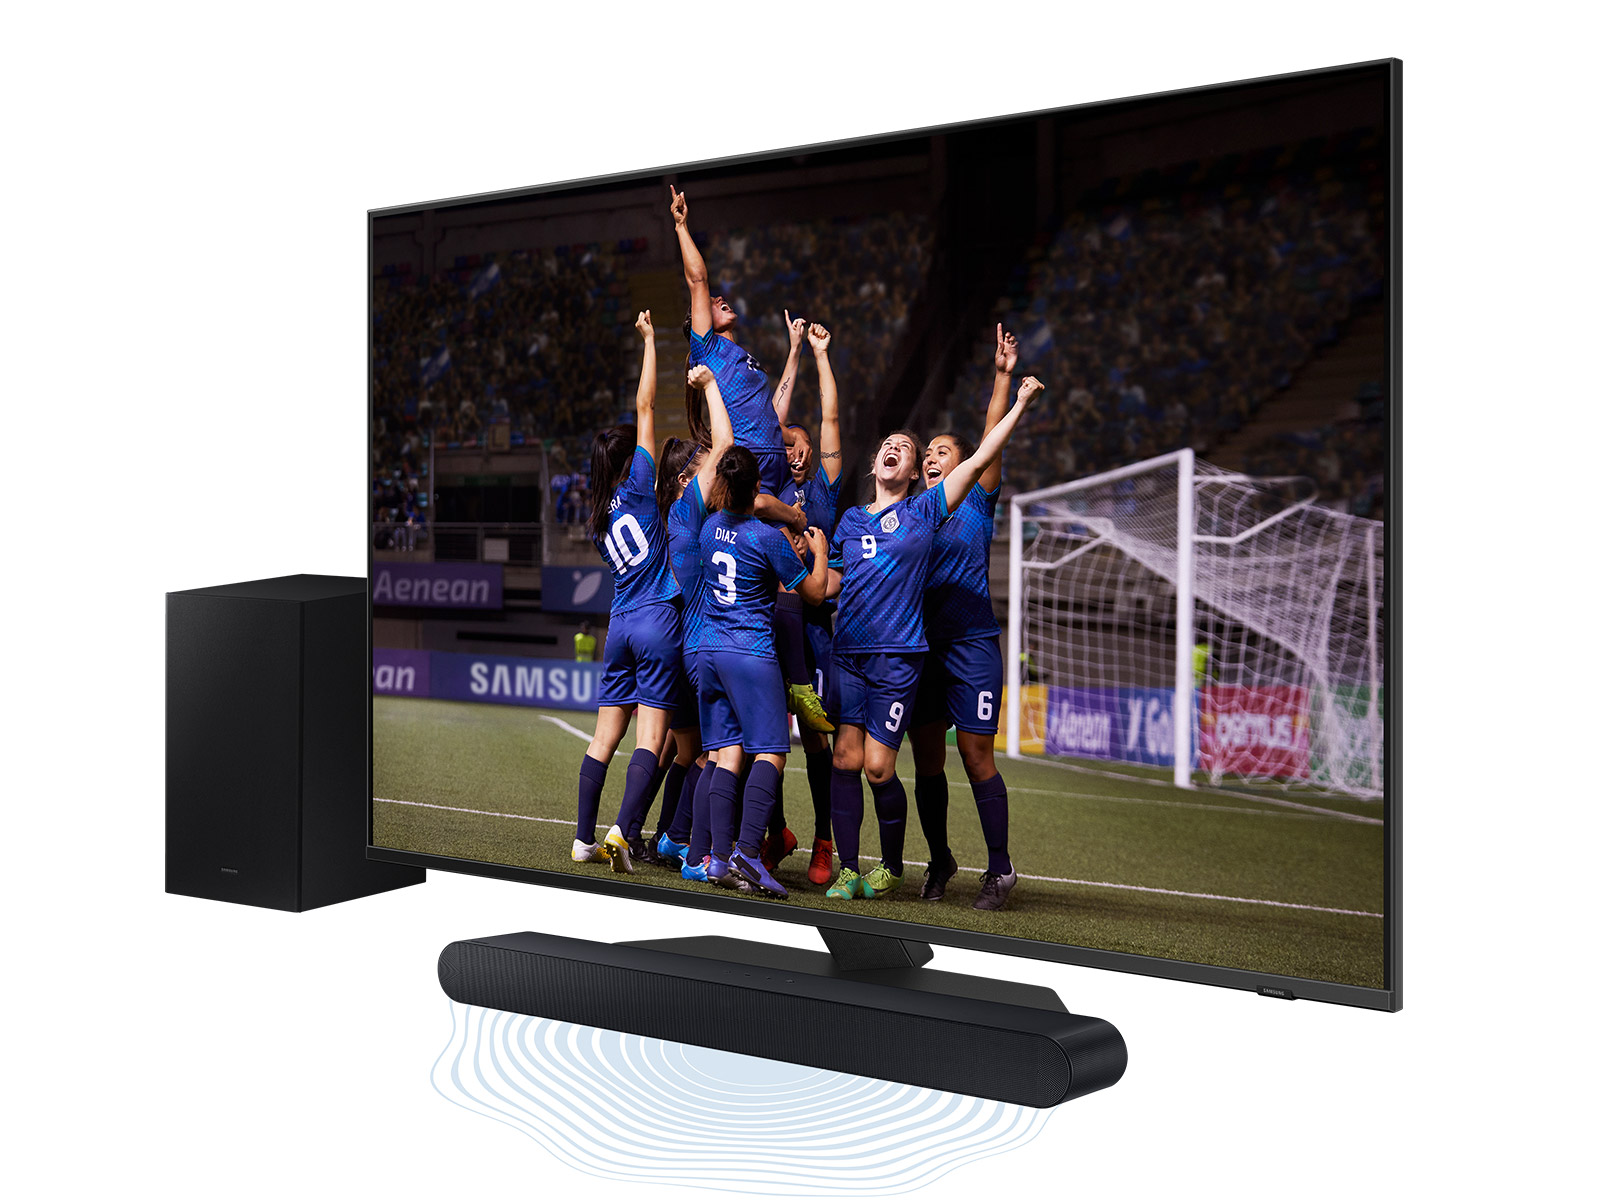 55 NU6900 Smart 4K UHD TV (2018) - UN55N6900FXZA